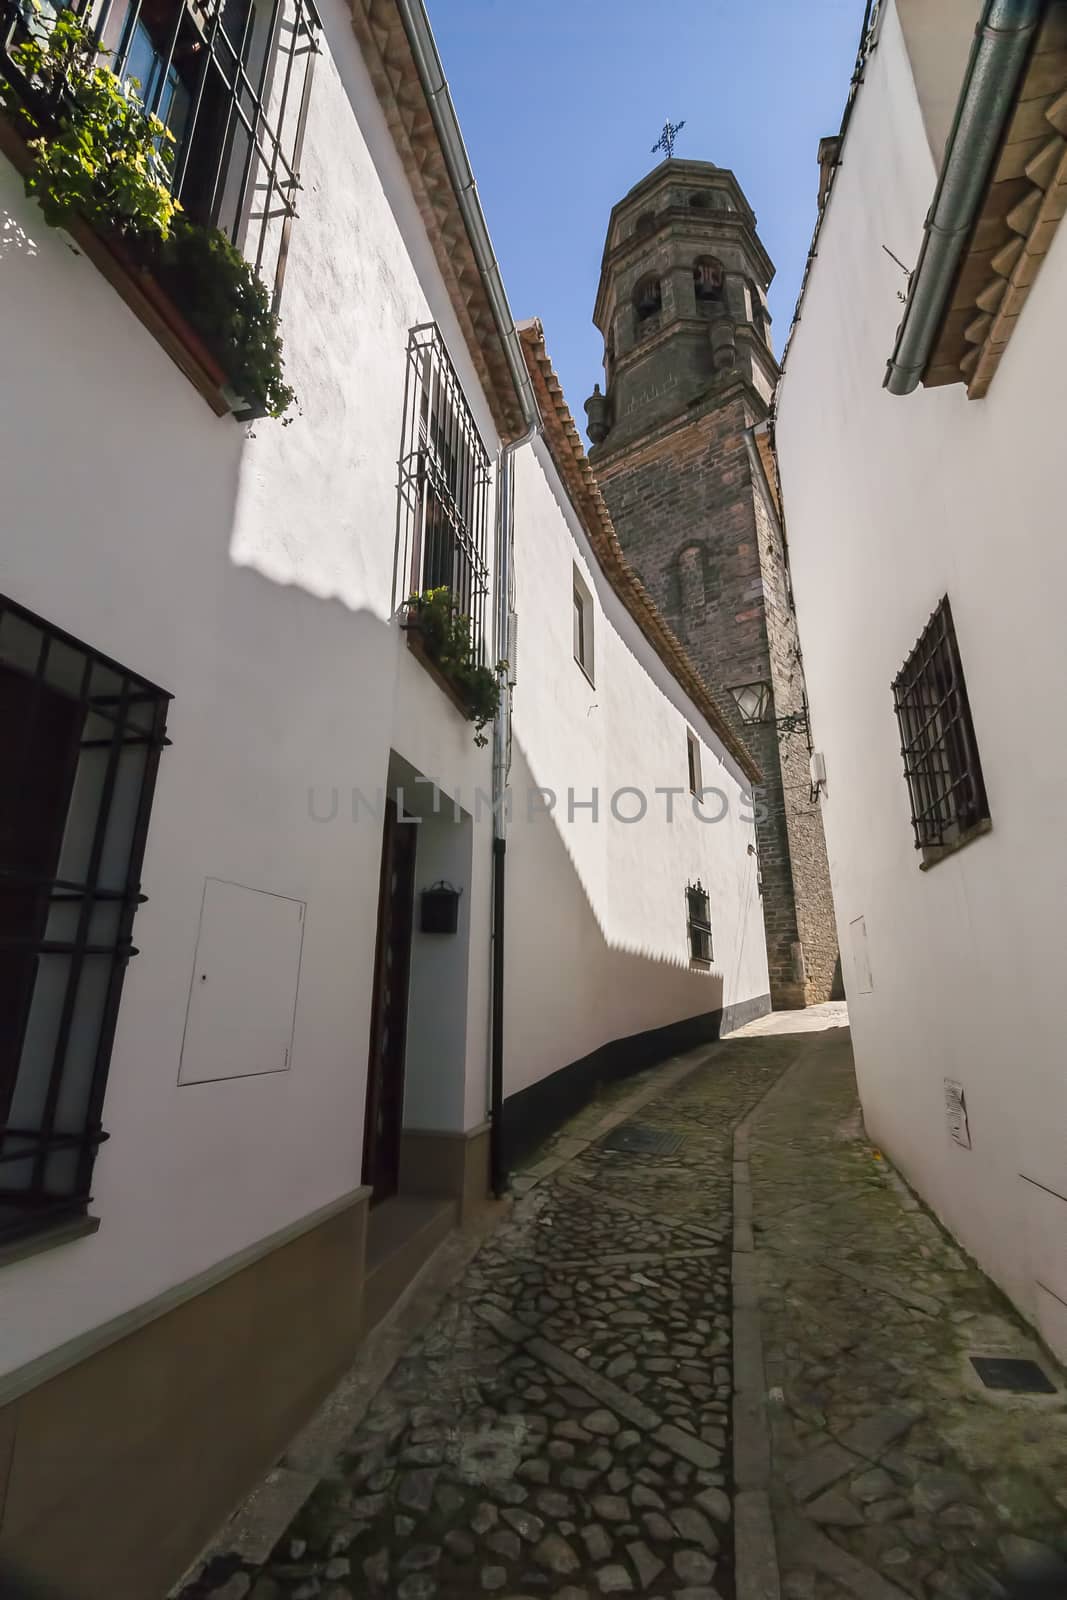 Very narrow street typical of Baeza by digicomphoto